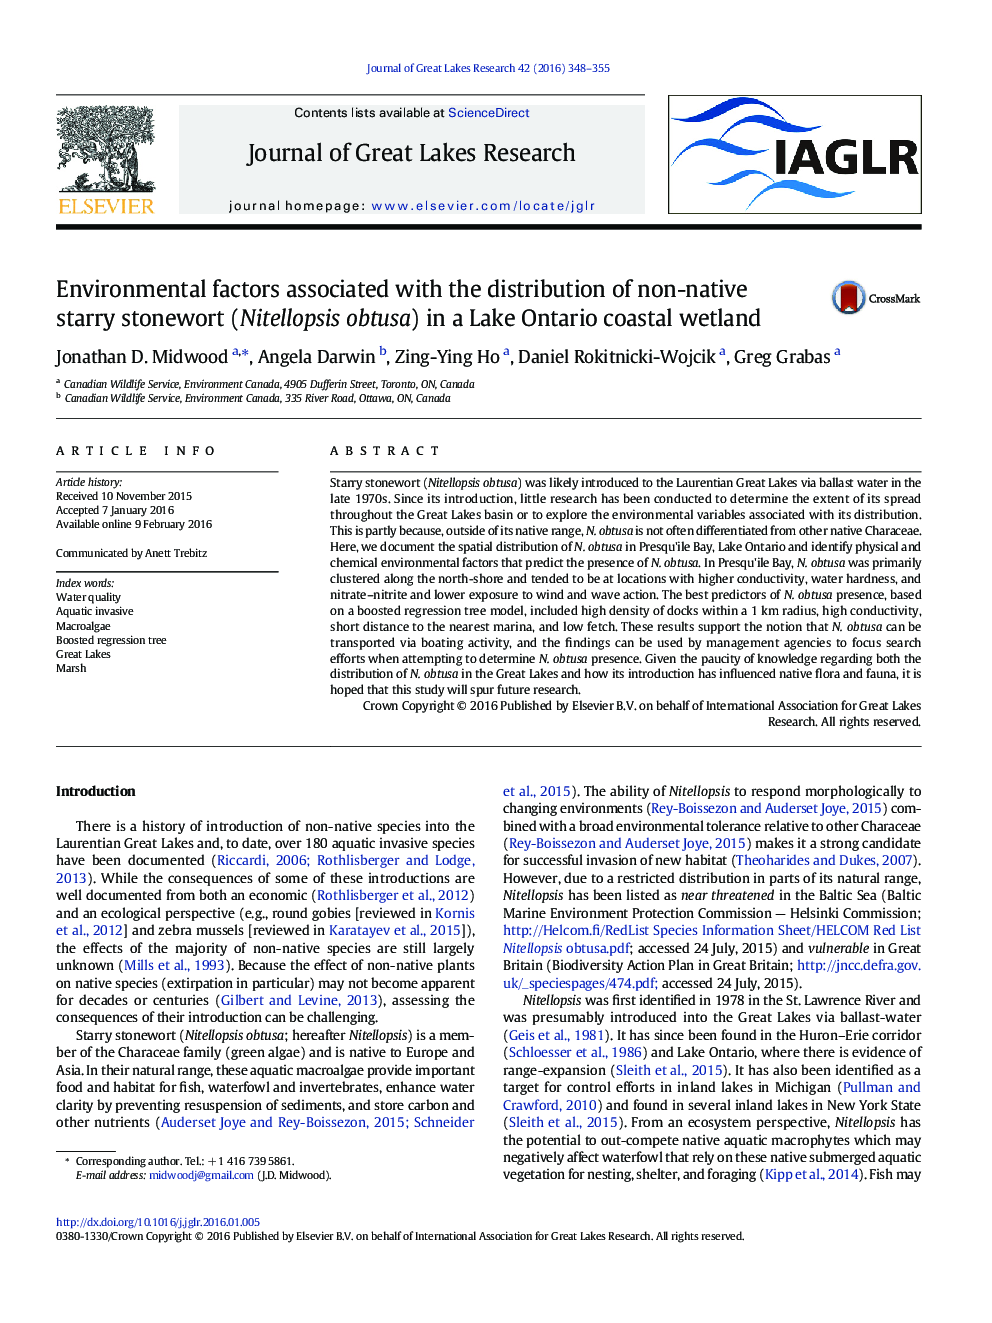 Environmental factors associated with the distribution of non-native starry stonewort (Nitellopsis obtusa) in a Lake Ontario coastal wetland